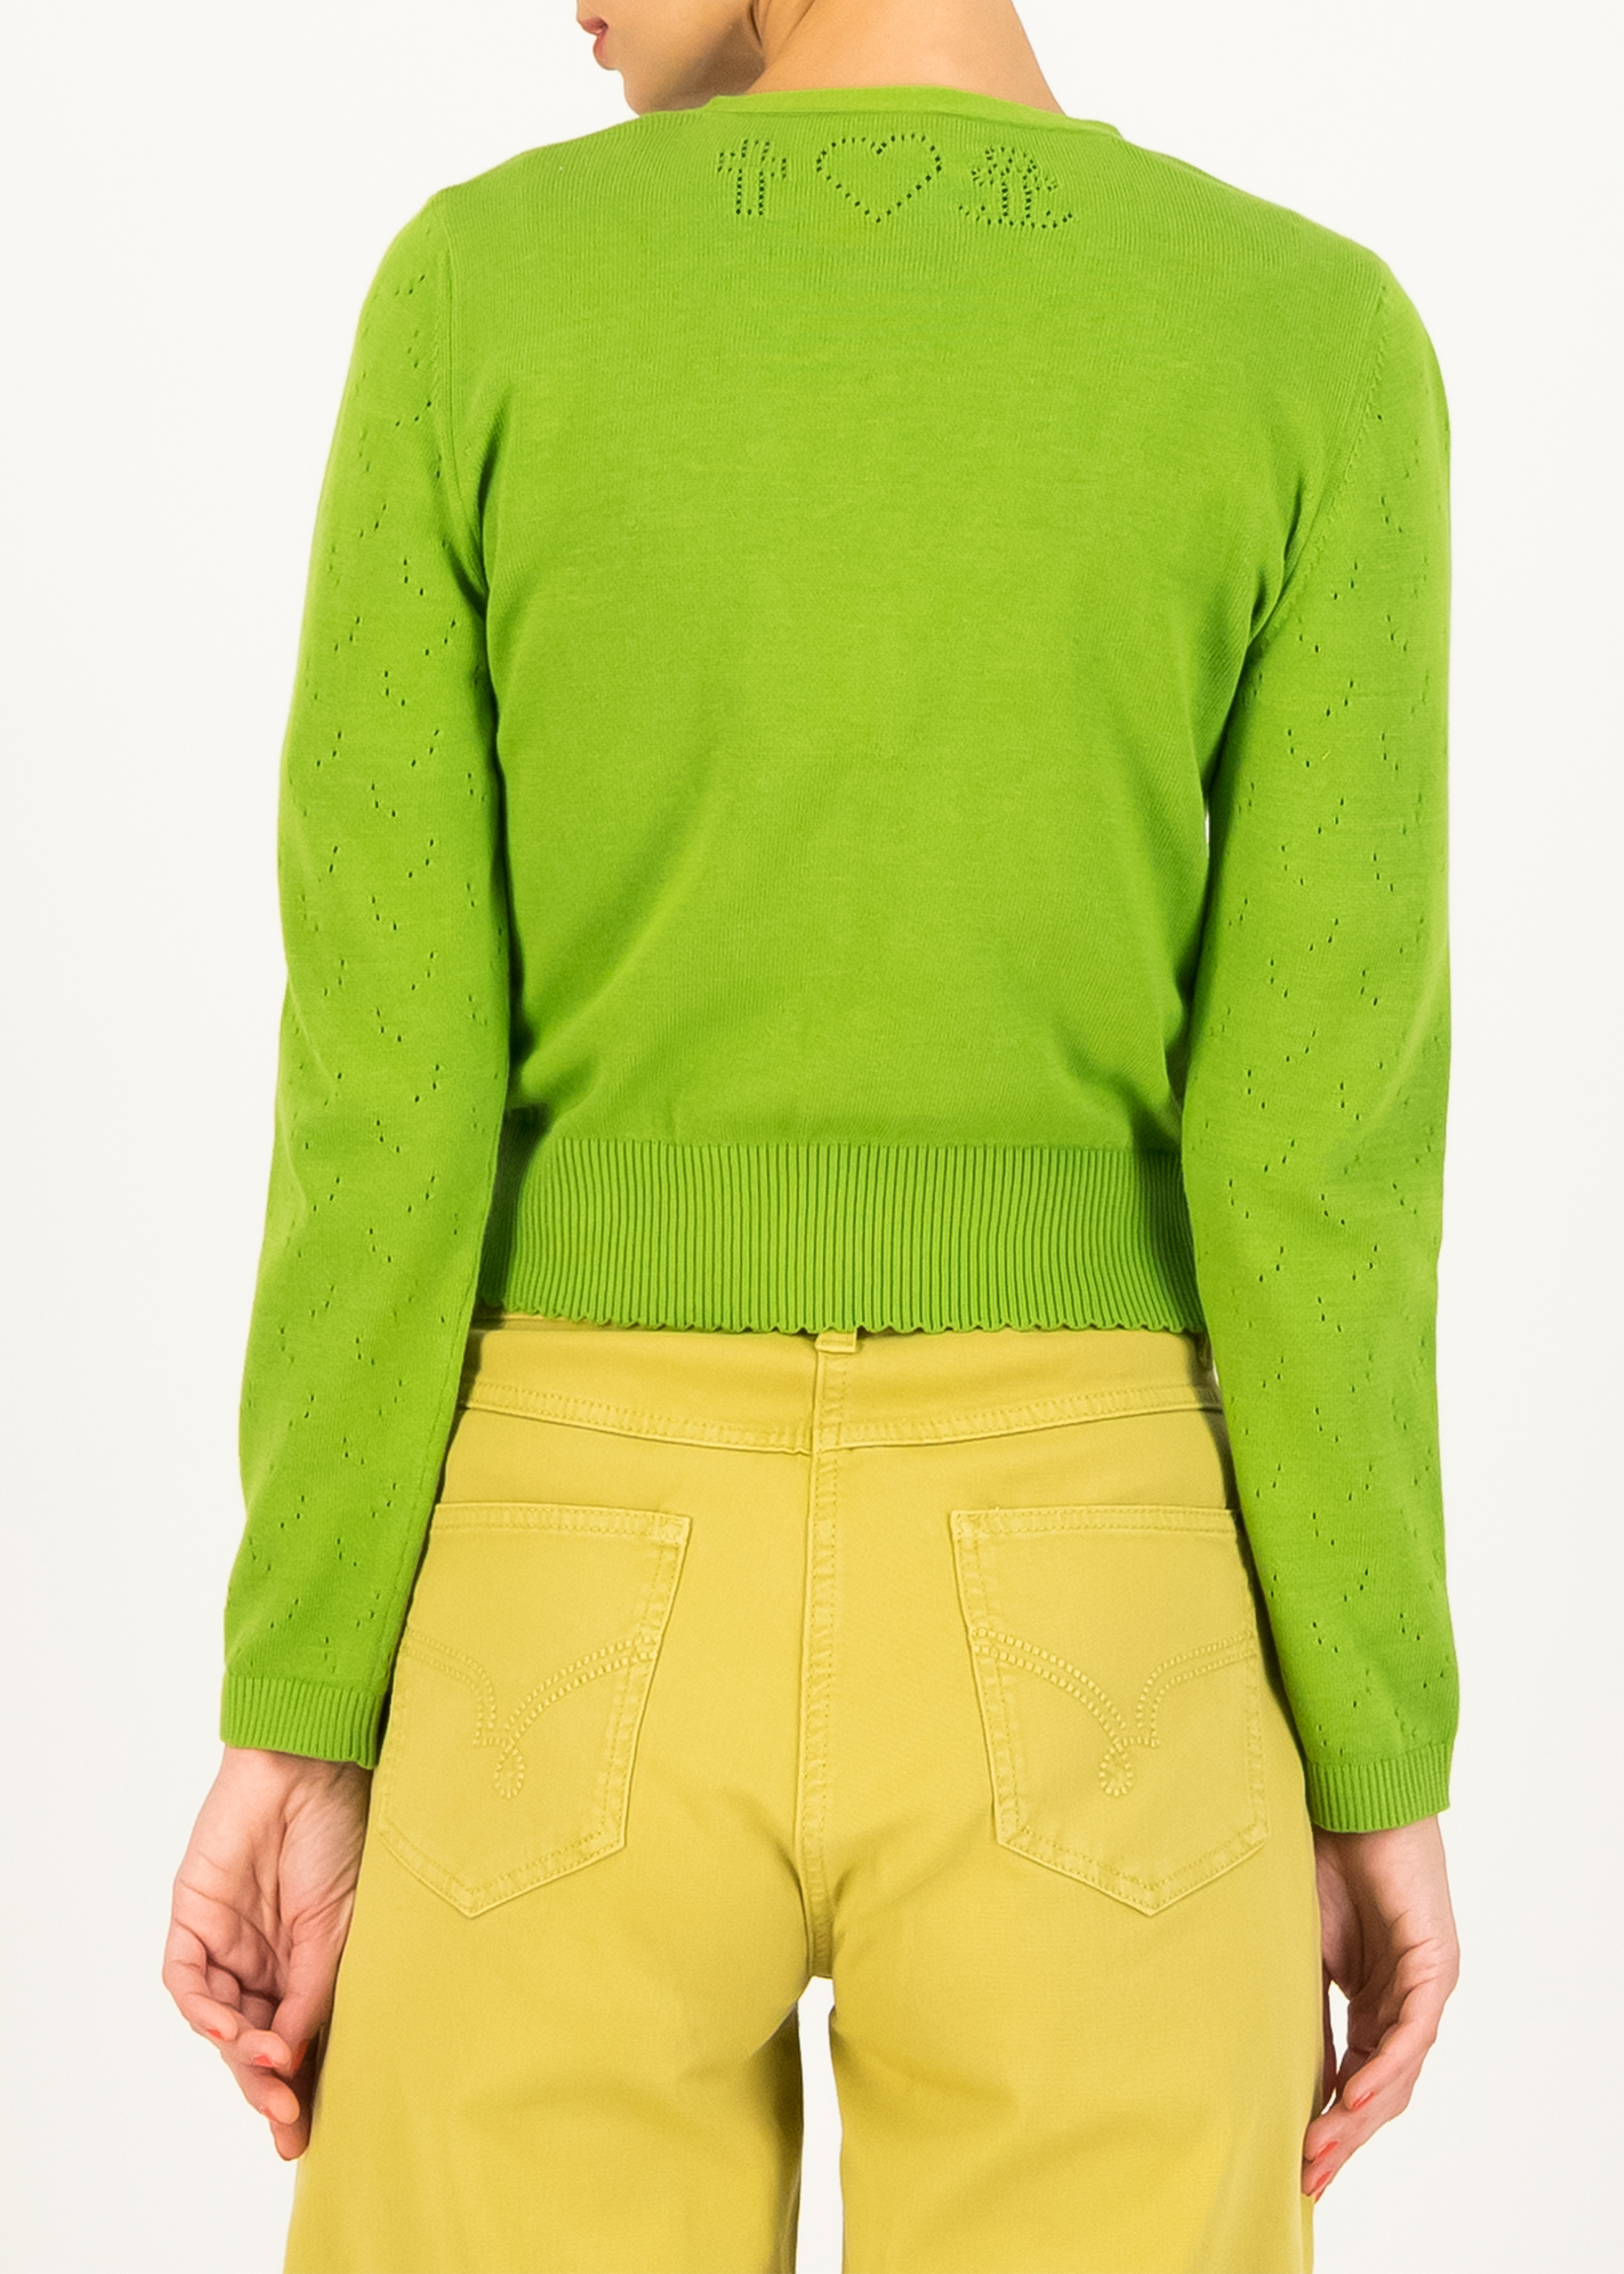 Cardigan Save the World - stunningly green knit